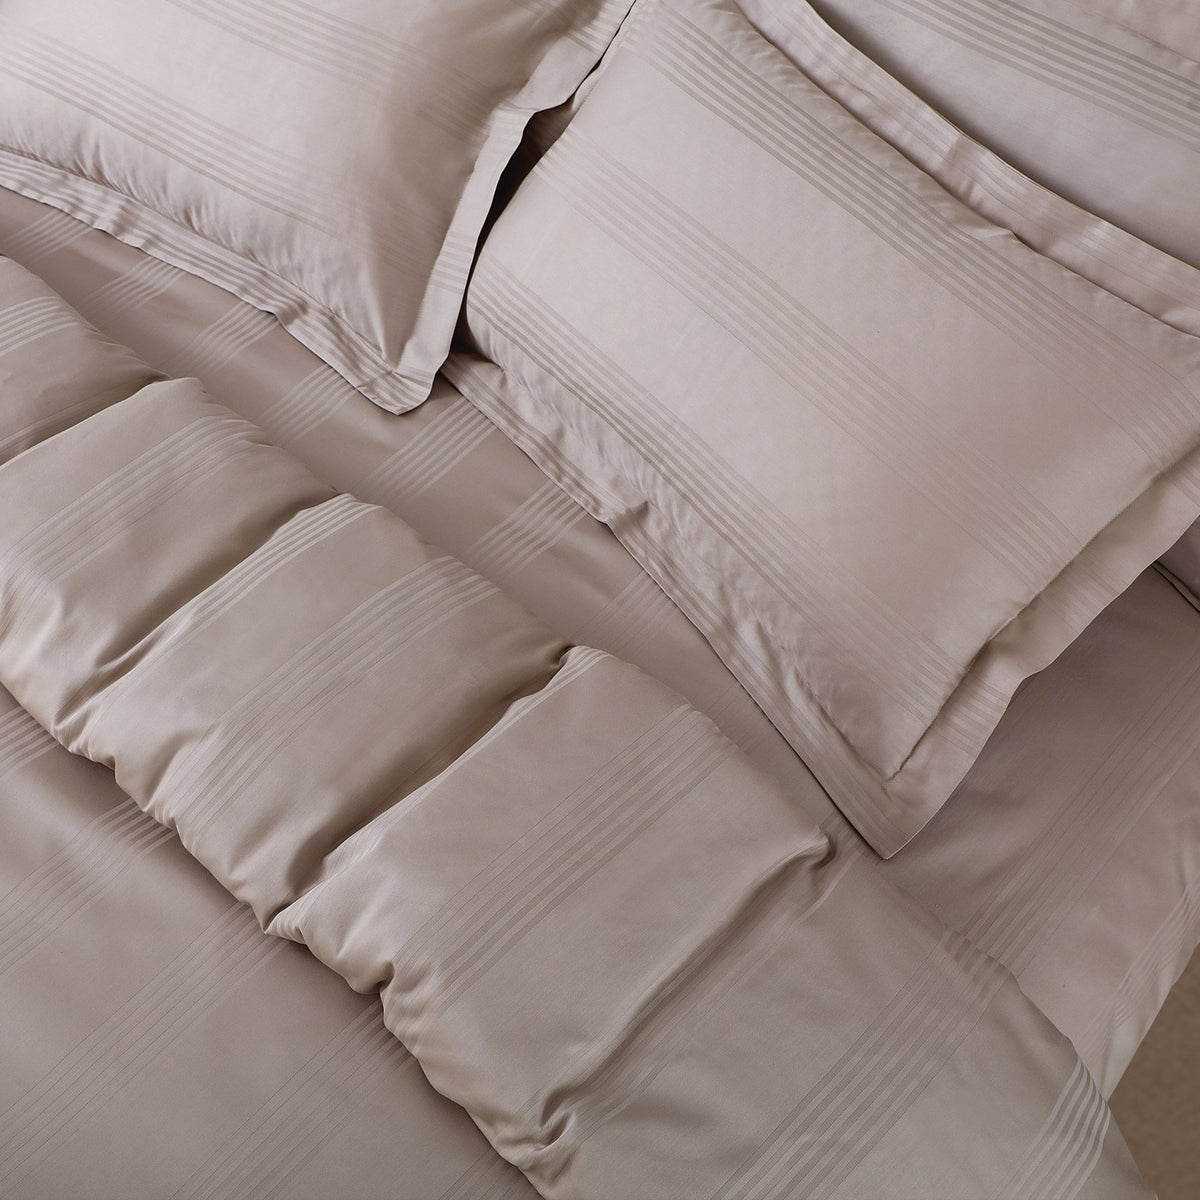 Malako Turin Jacquard Beige Stripes 450 TC 100% Cotton King Size Bed Sheet - MALAKO